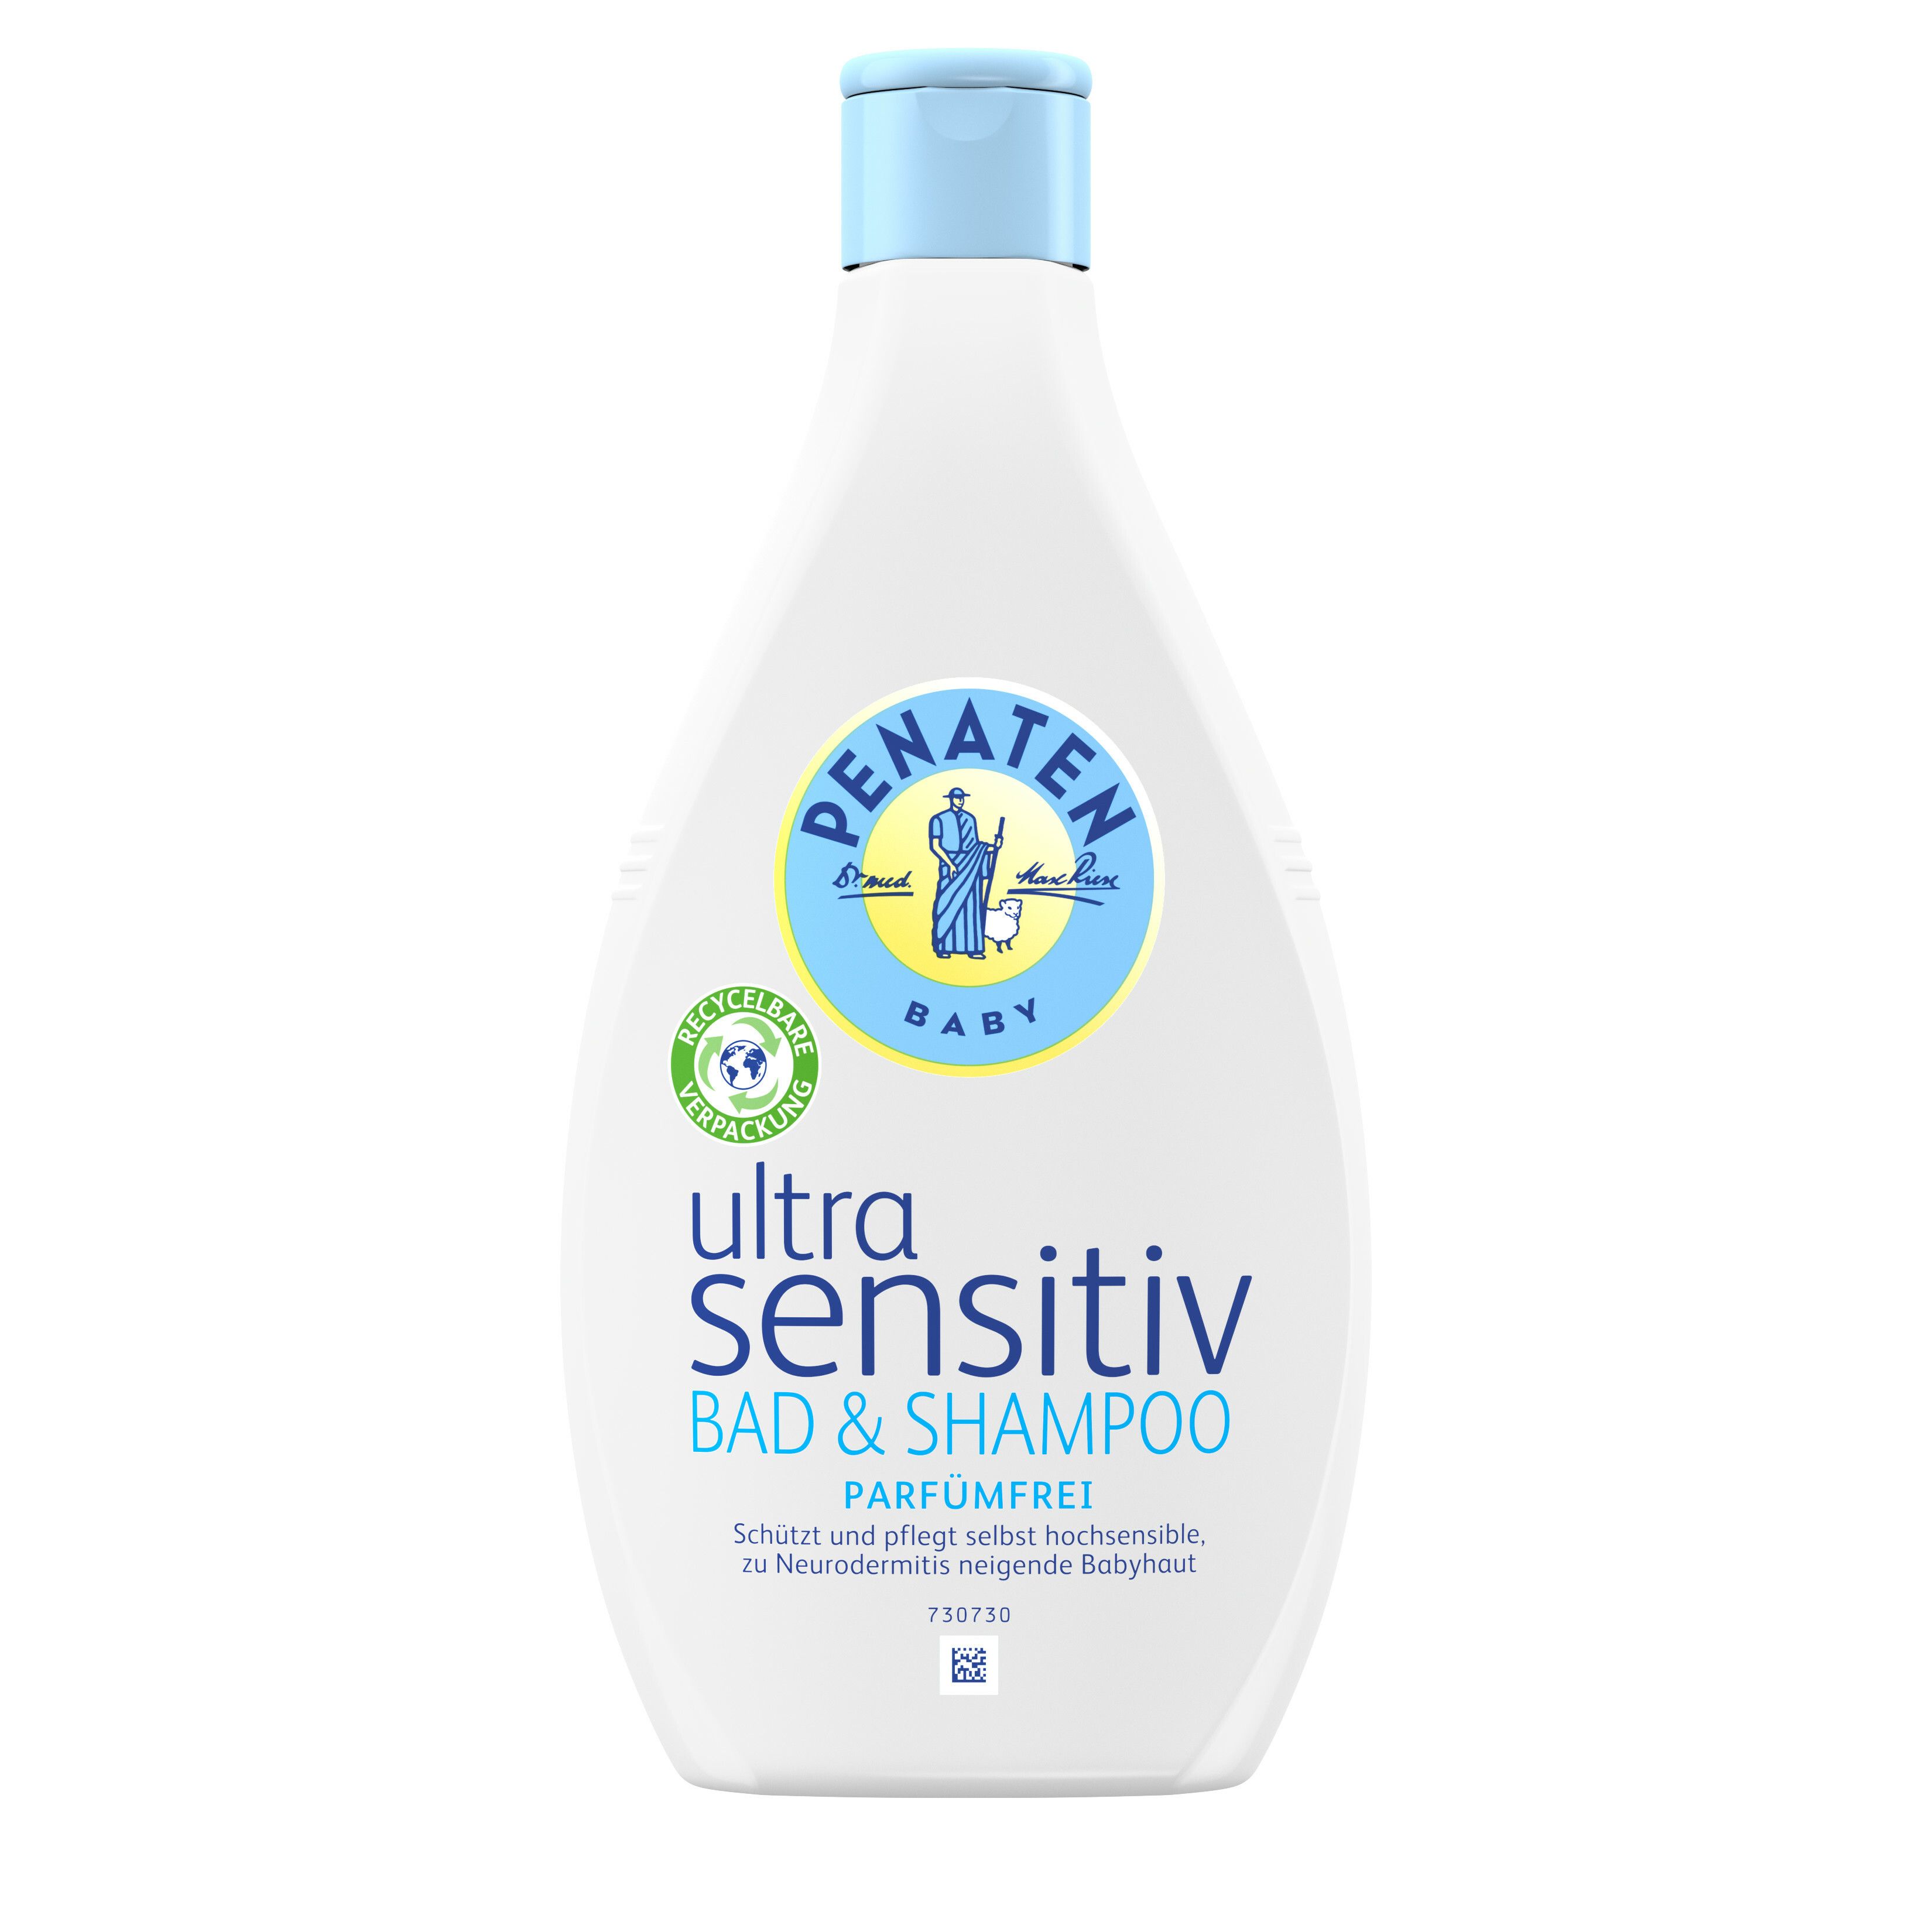 PENATEN® Ultra sensitiv Bad & Shampoo